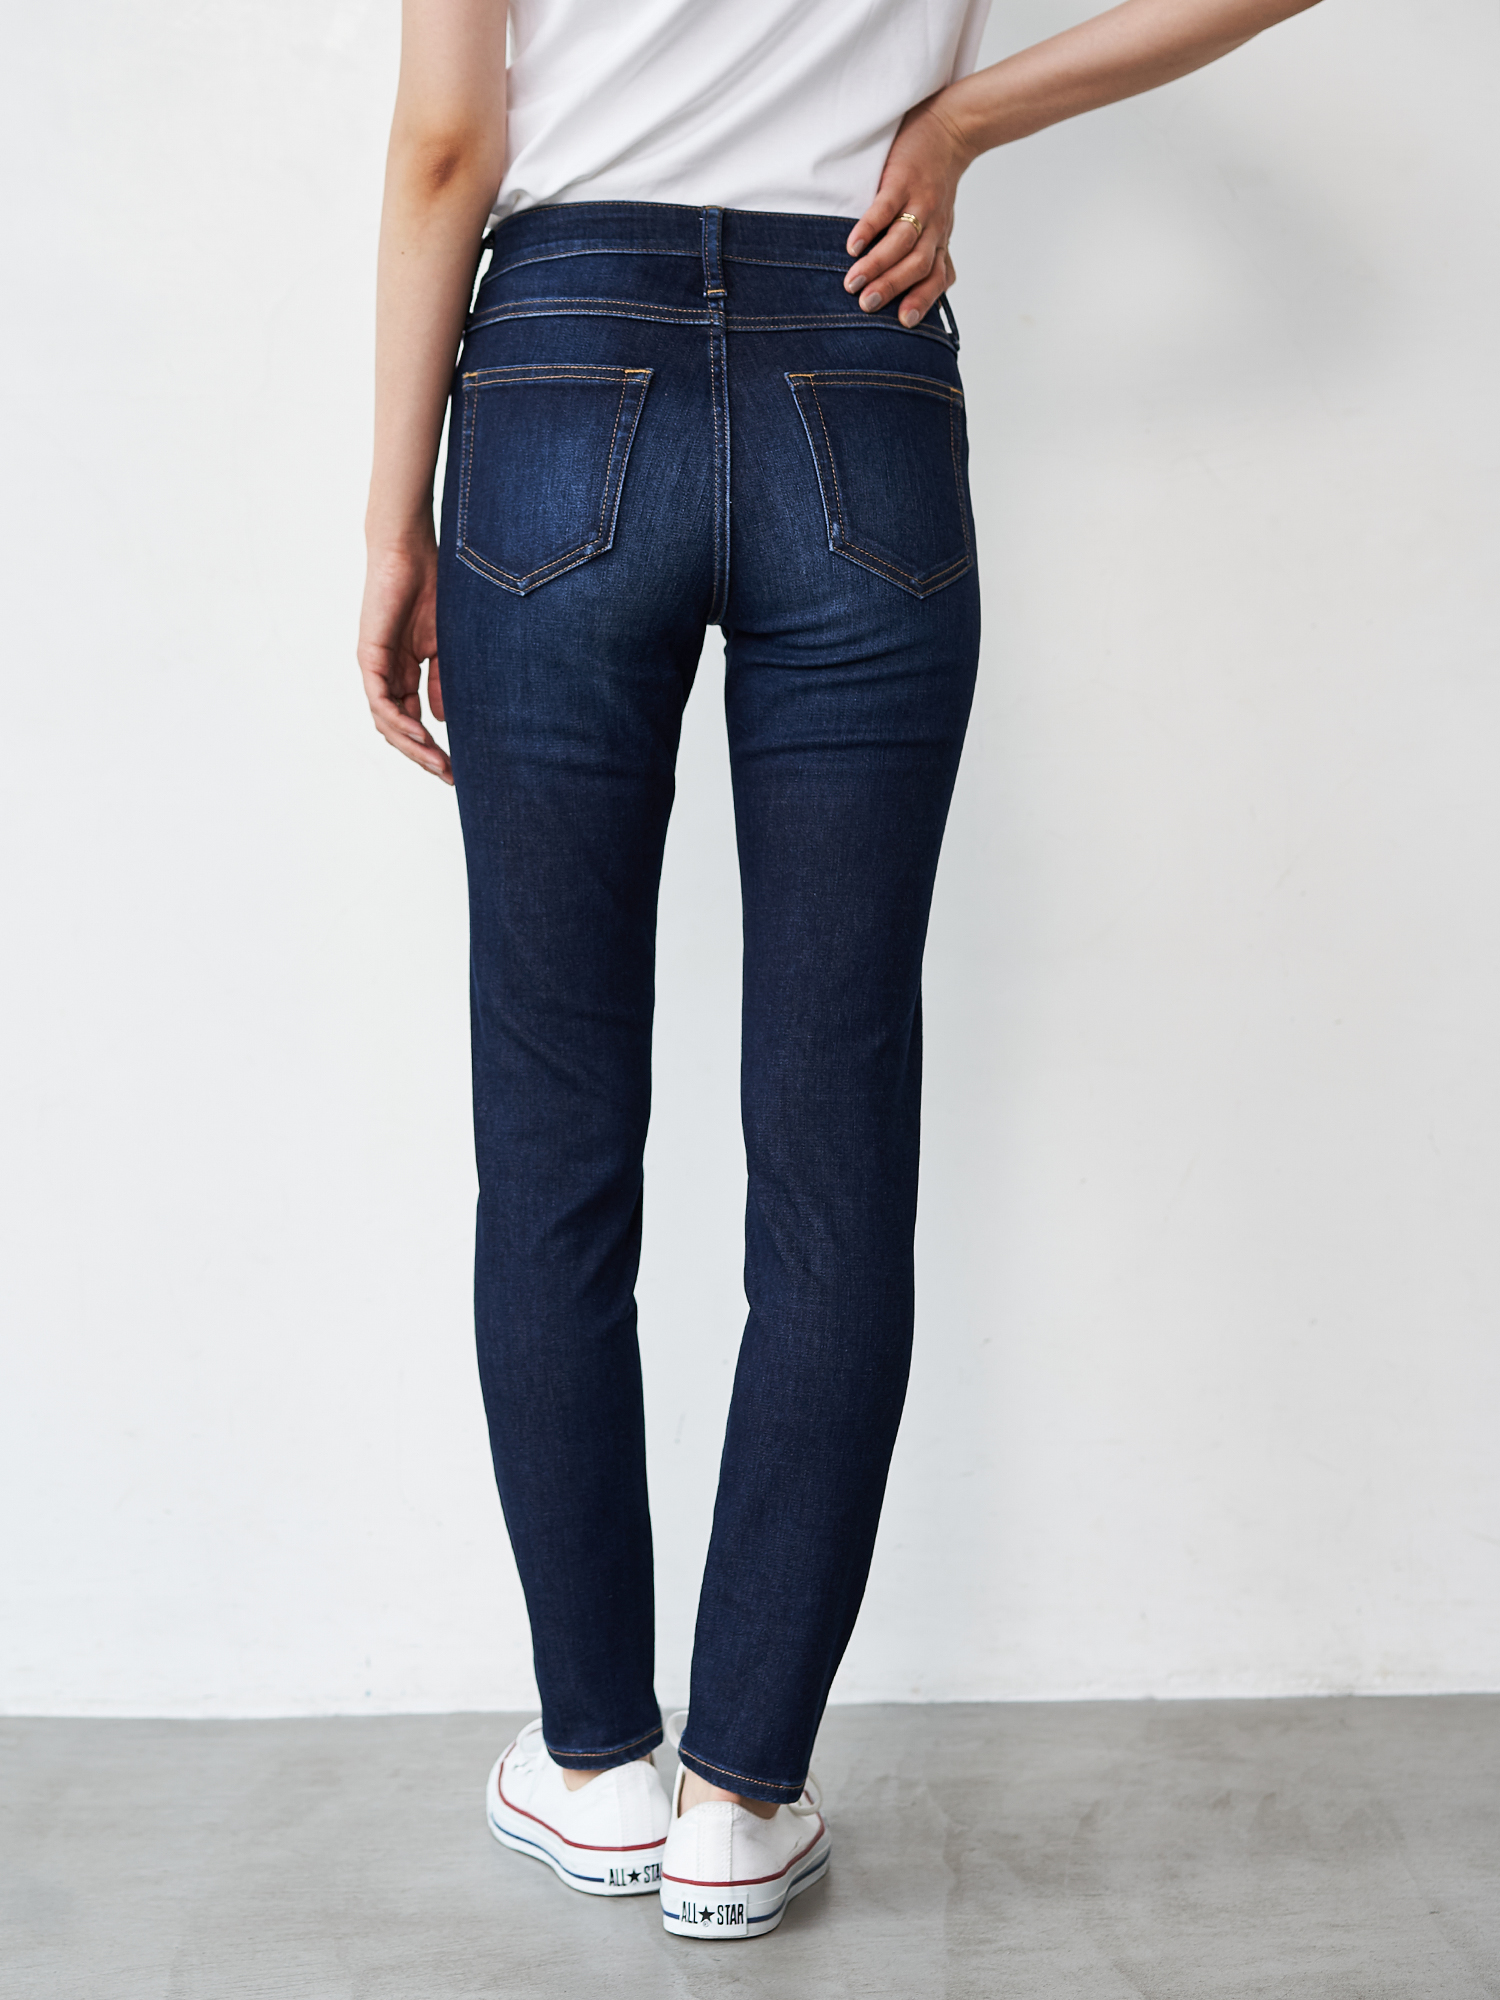 American Holic Skinny Fit Jeans Black Metro Department Store